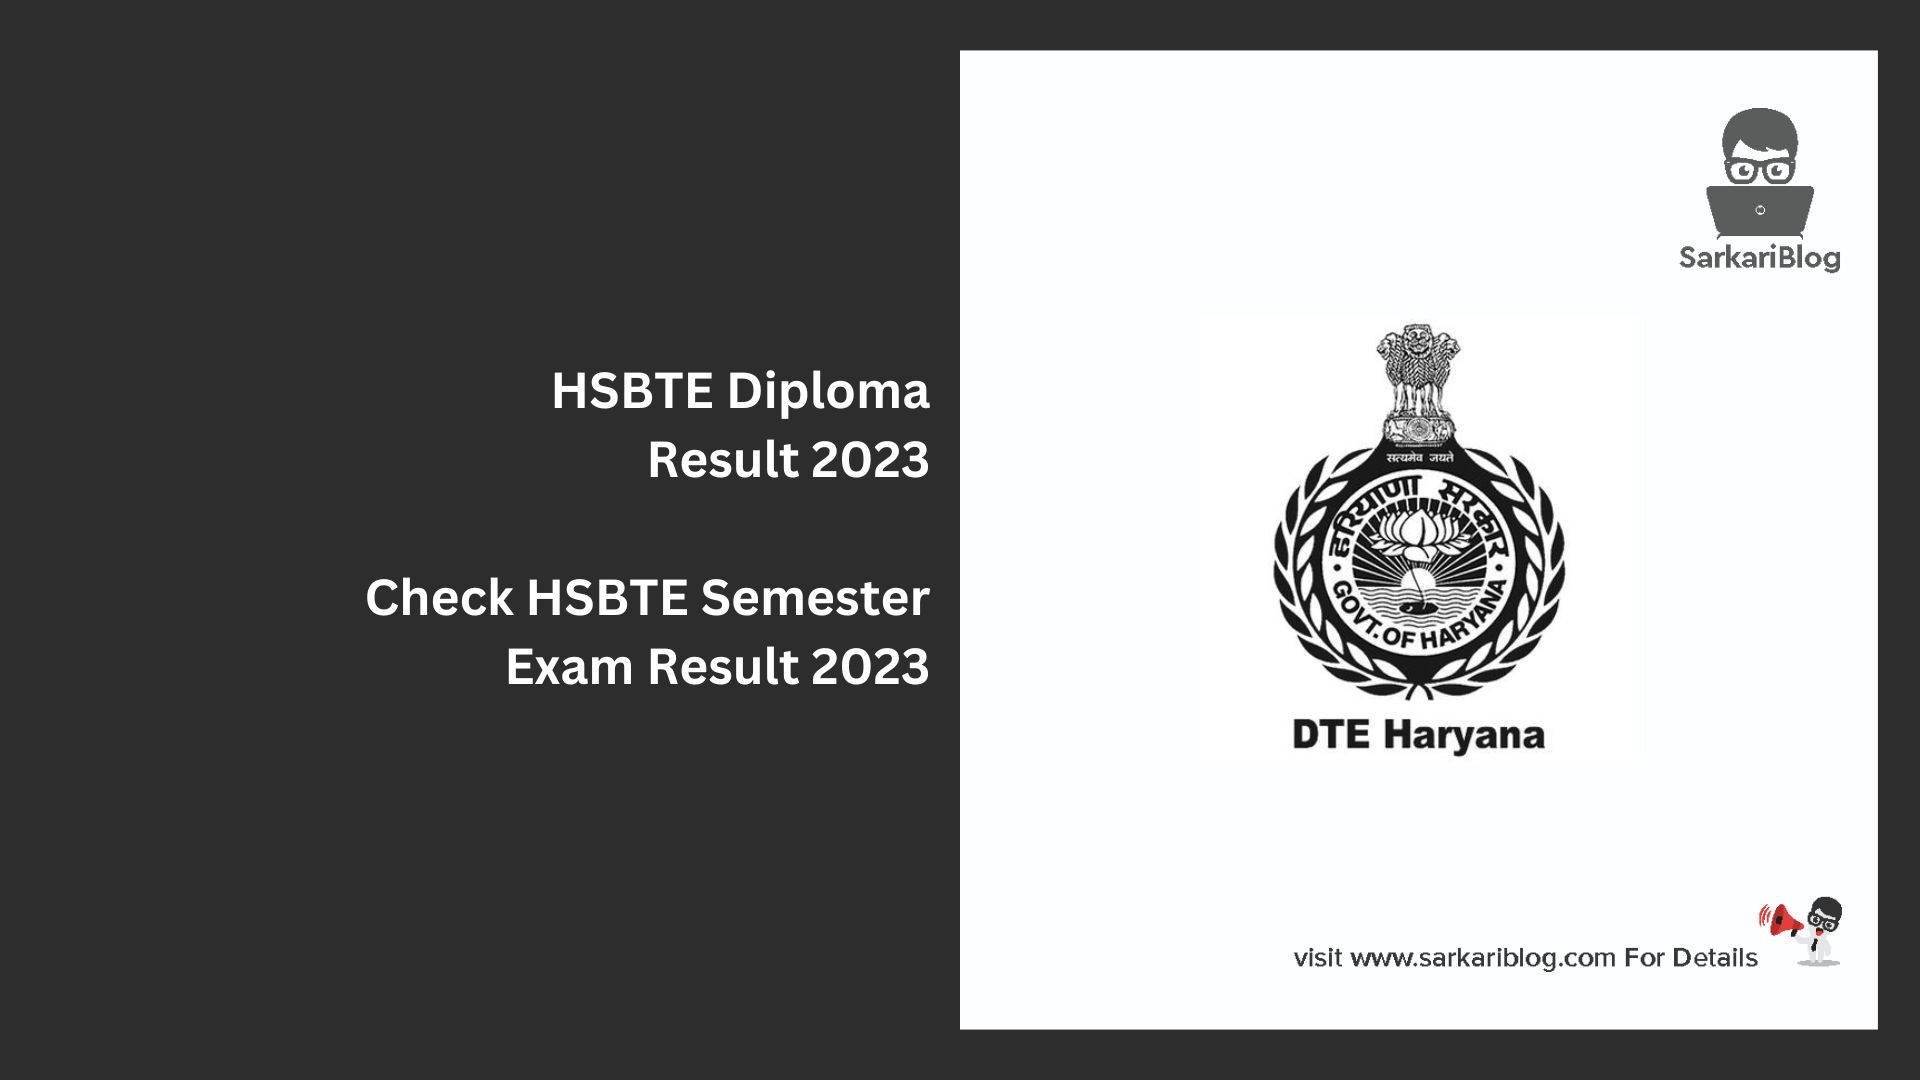 HSBTE Diploma Result 2023